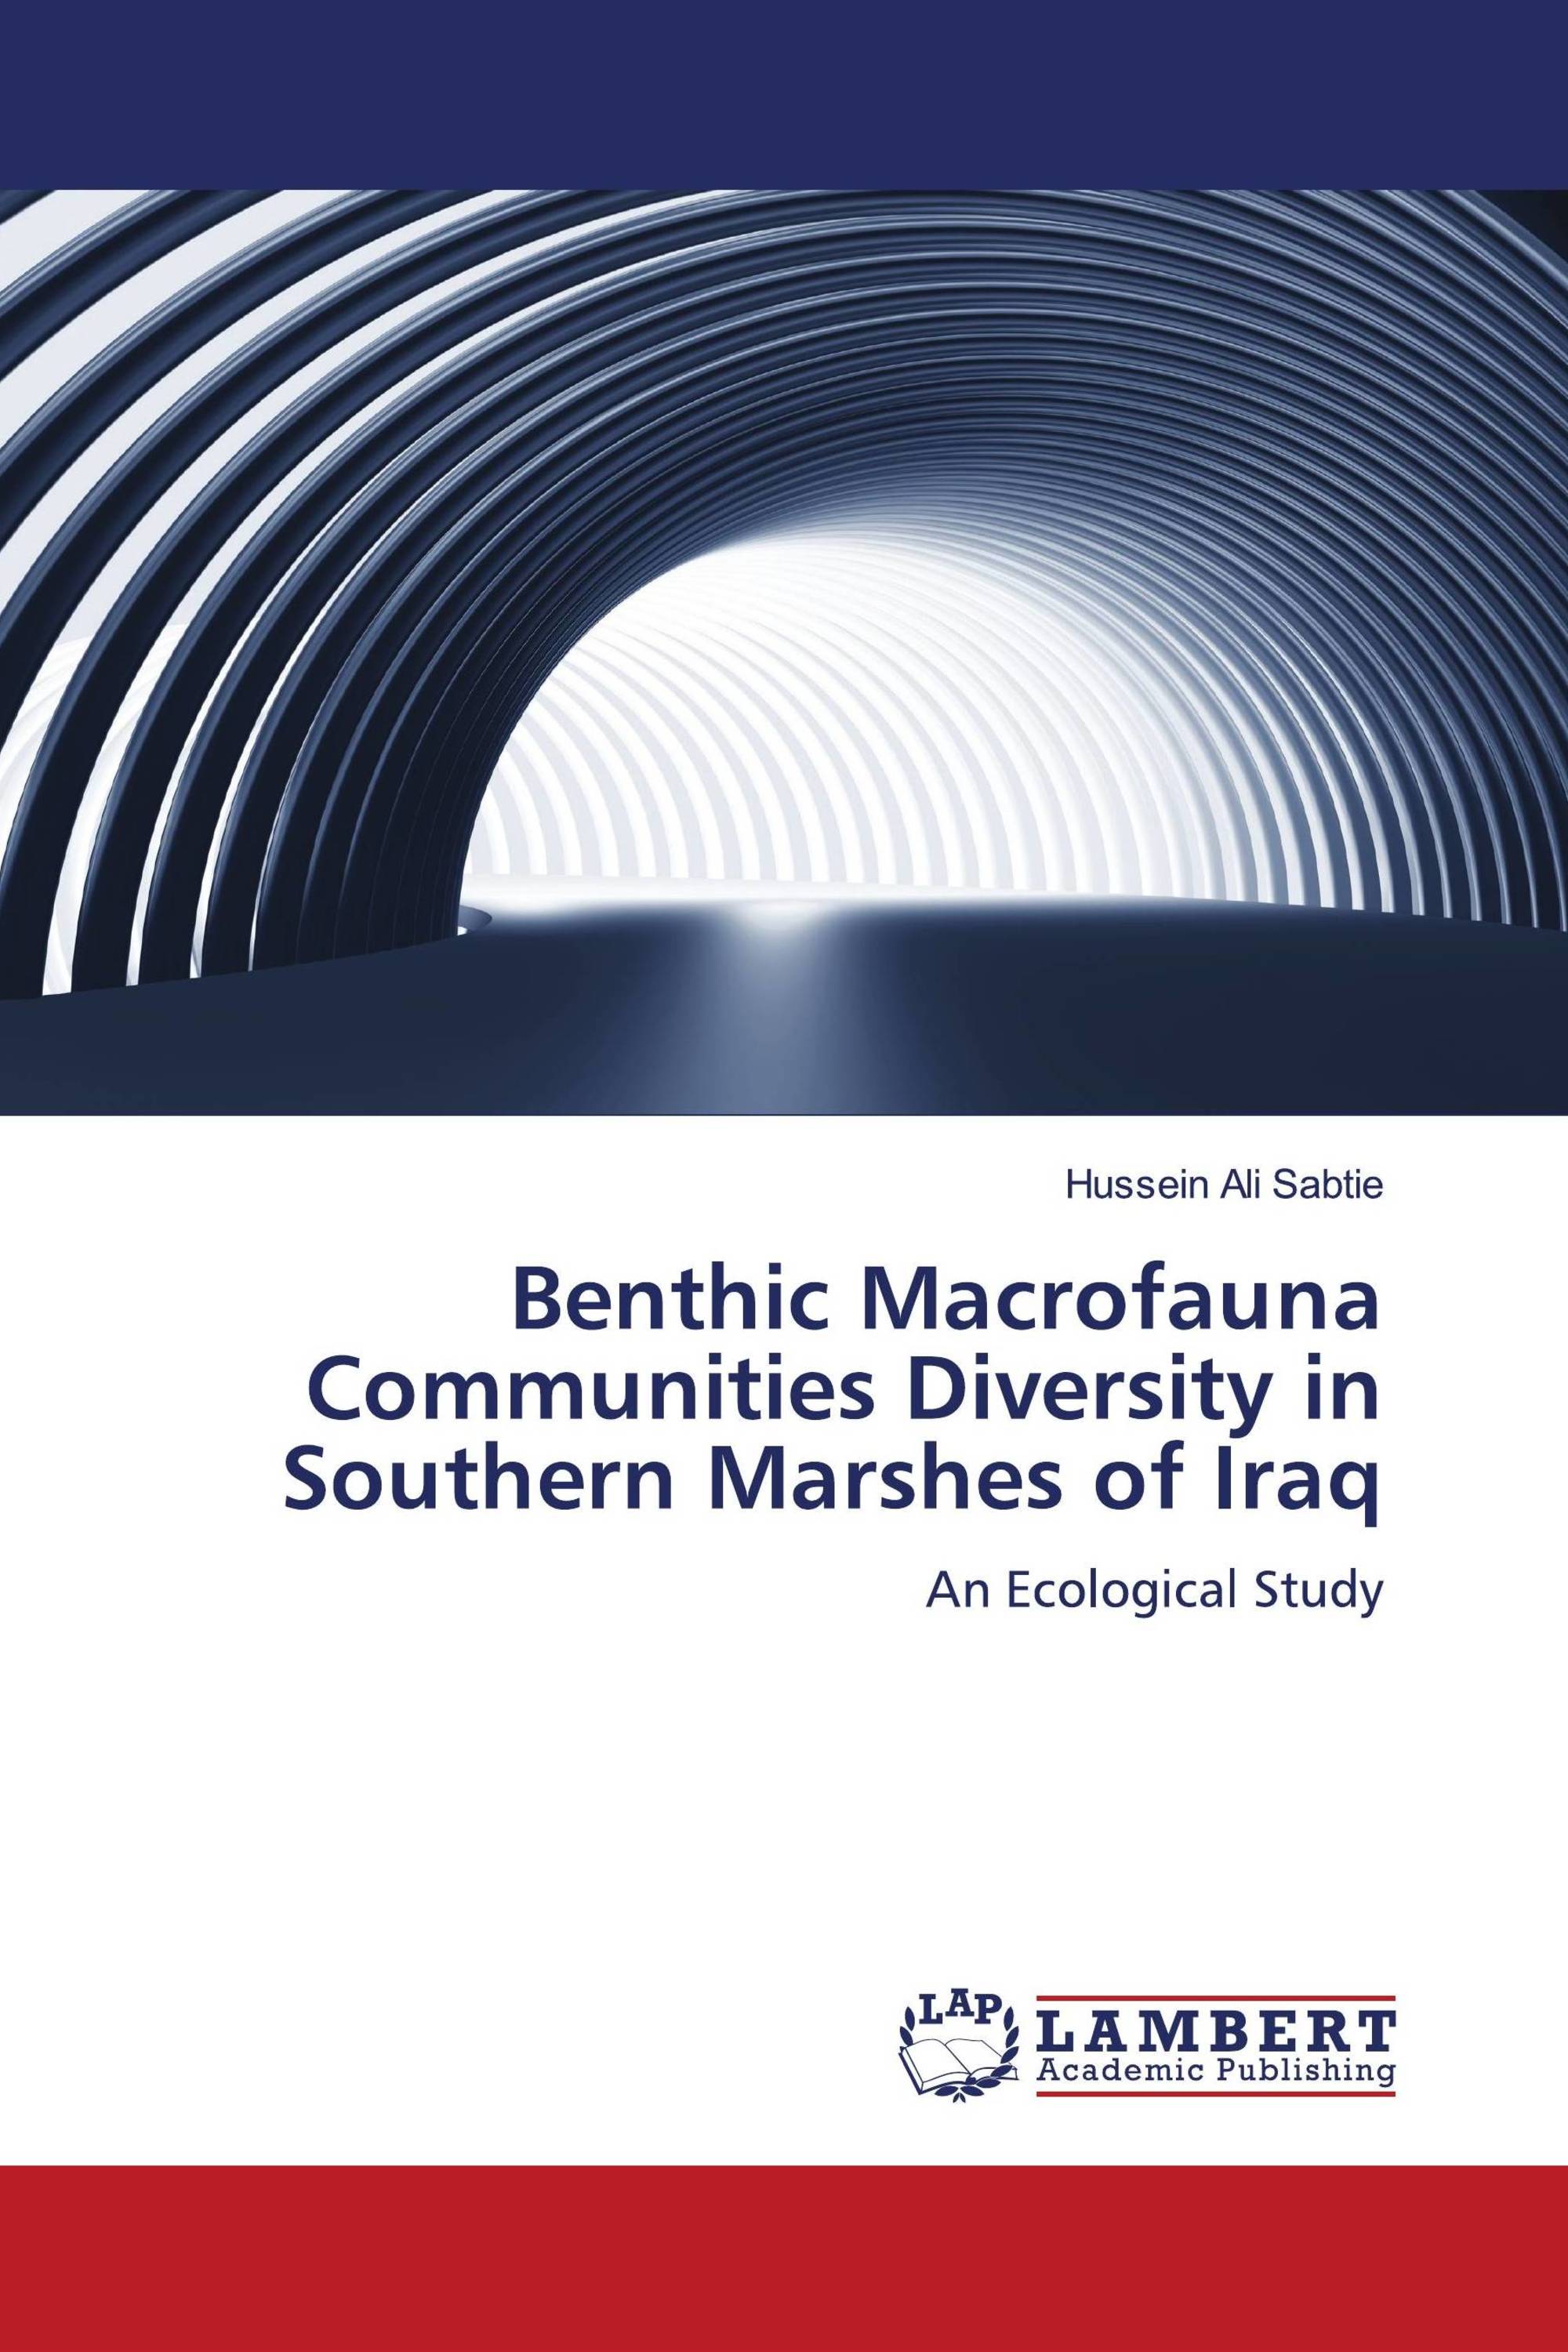 Benthic Macrofauna Communities Diversity in Southern Marshes of Iraq